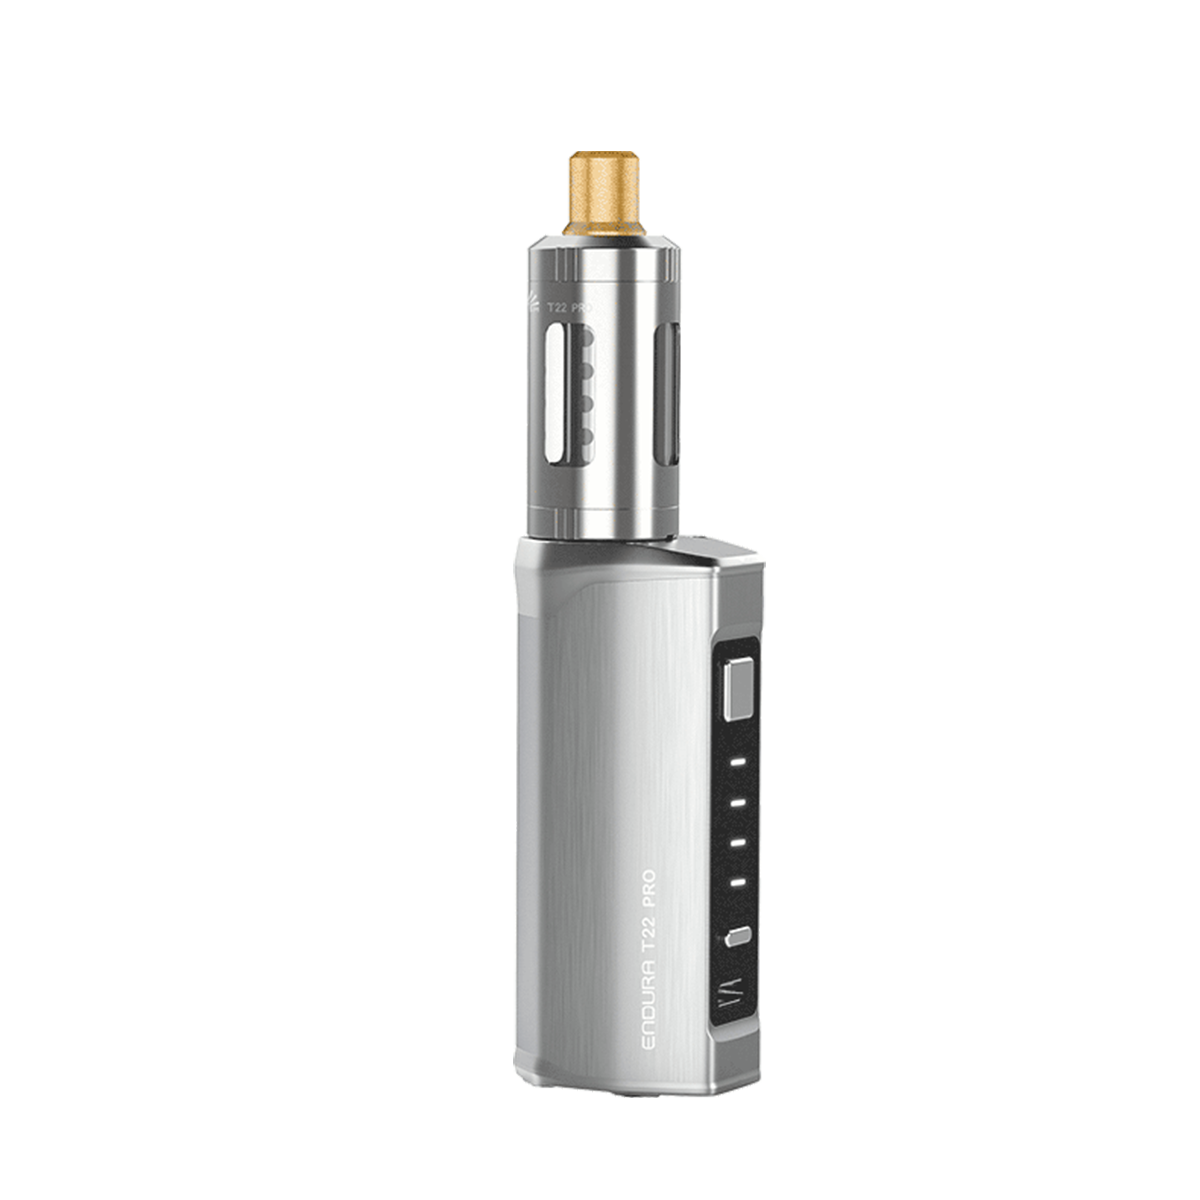 Innokin Endura T22 Pro Advanced Mod Kit Brushed Silver  